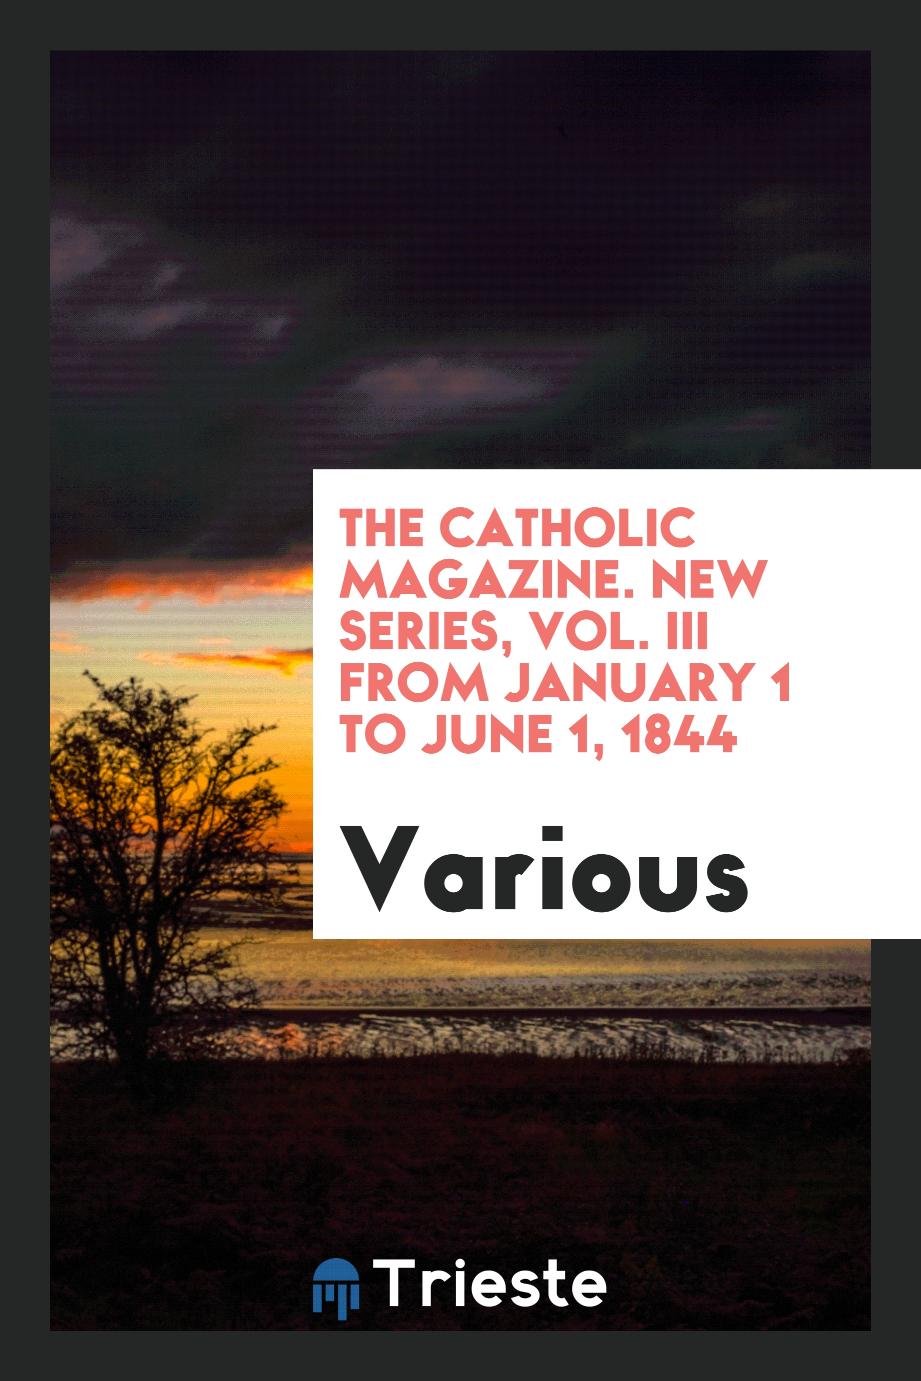 The Catholic Magazine. New Series, Vol. III from January 1 to June 1, 1844